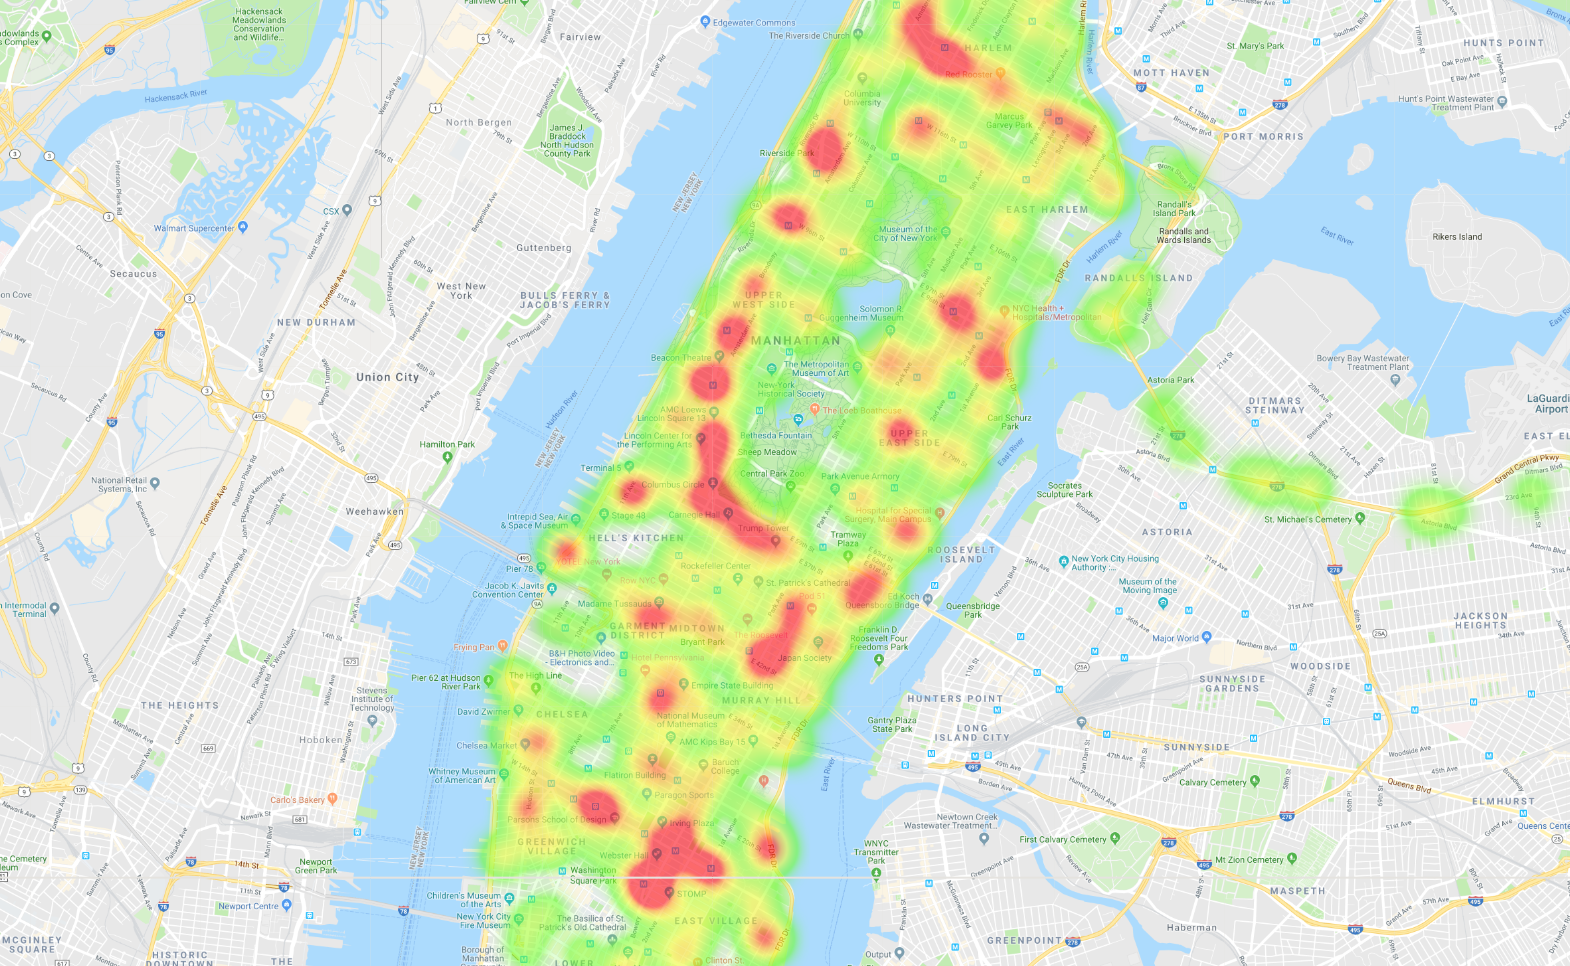 Heat map of New York city.